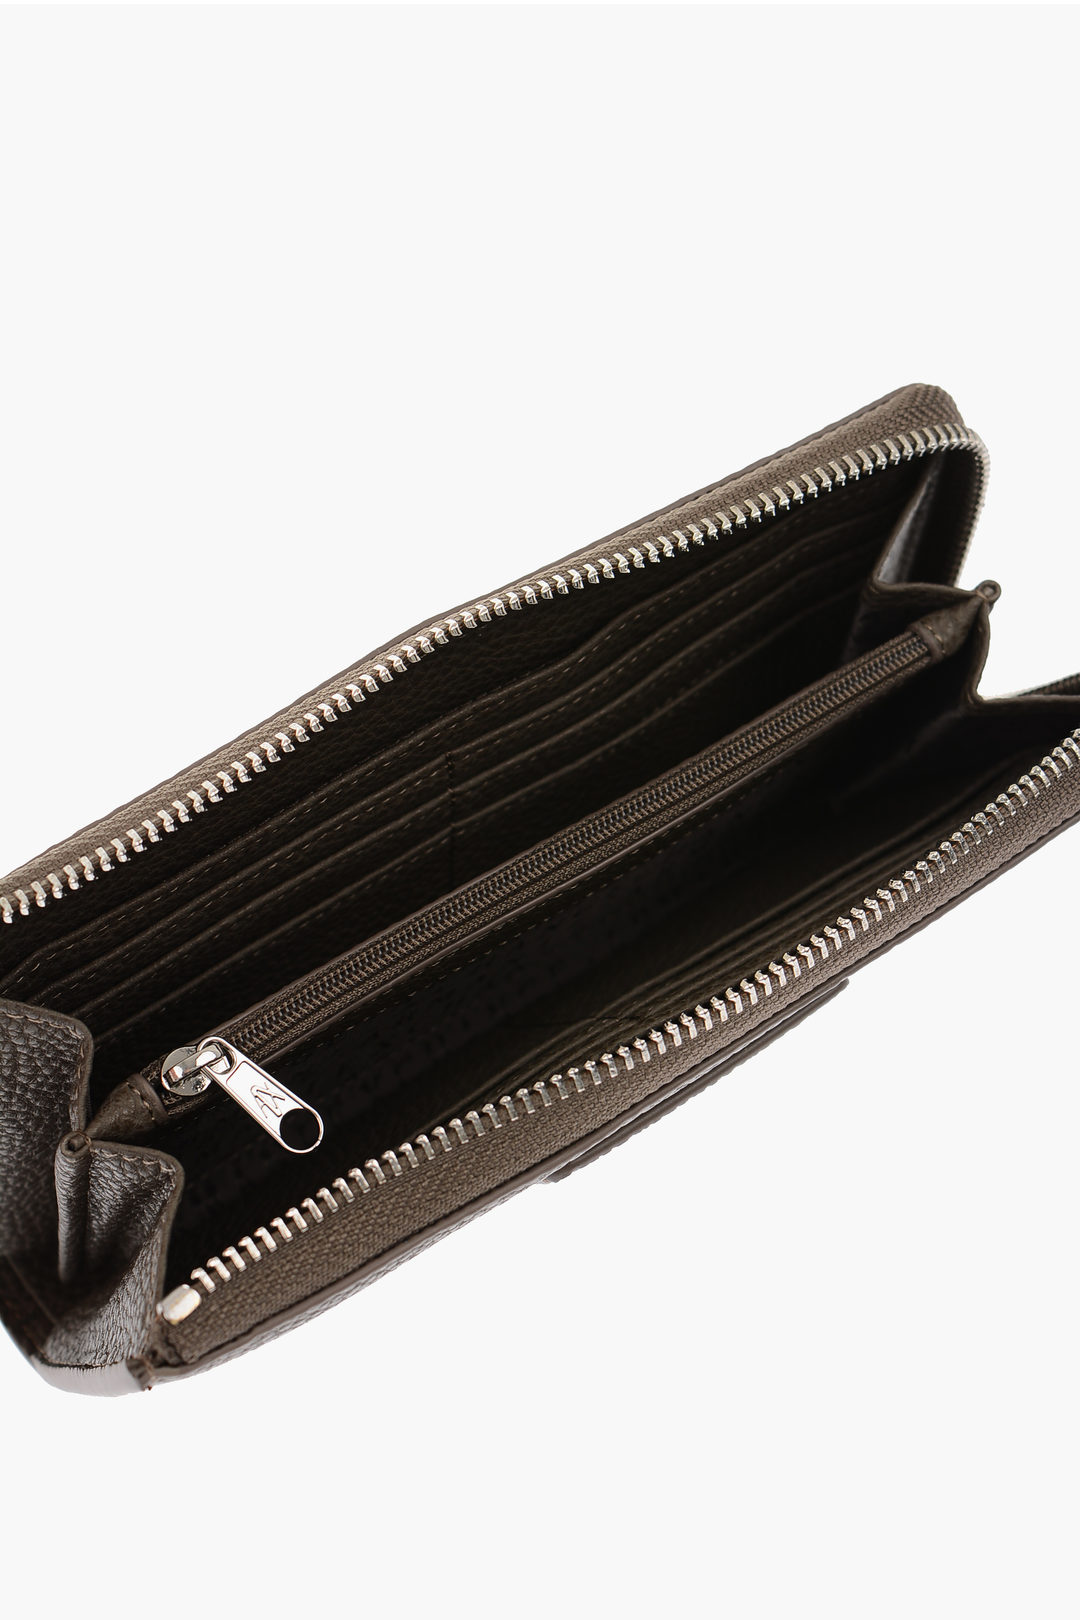 Armani ARMANI EXCHANGE Faux Leather Wallet women - Glamood Outlet